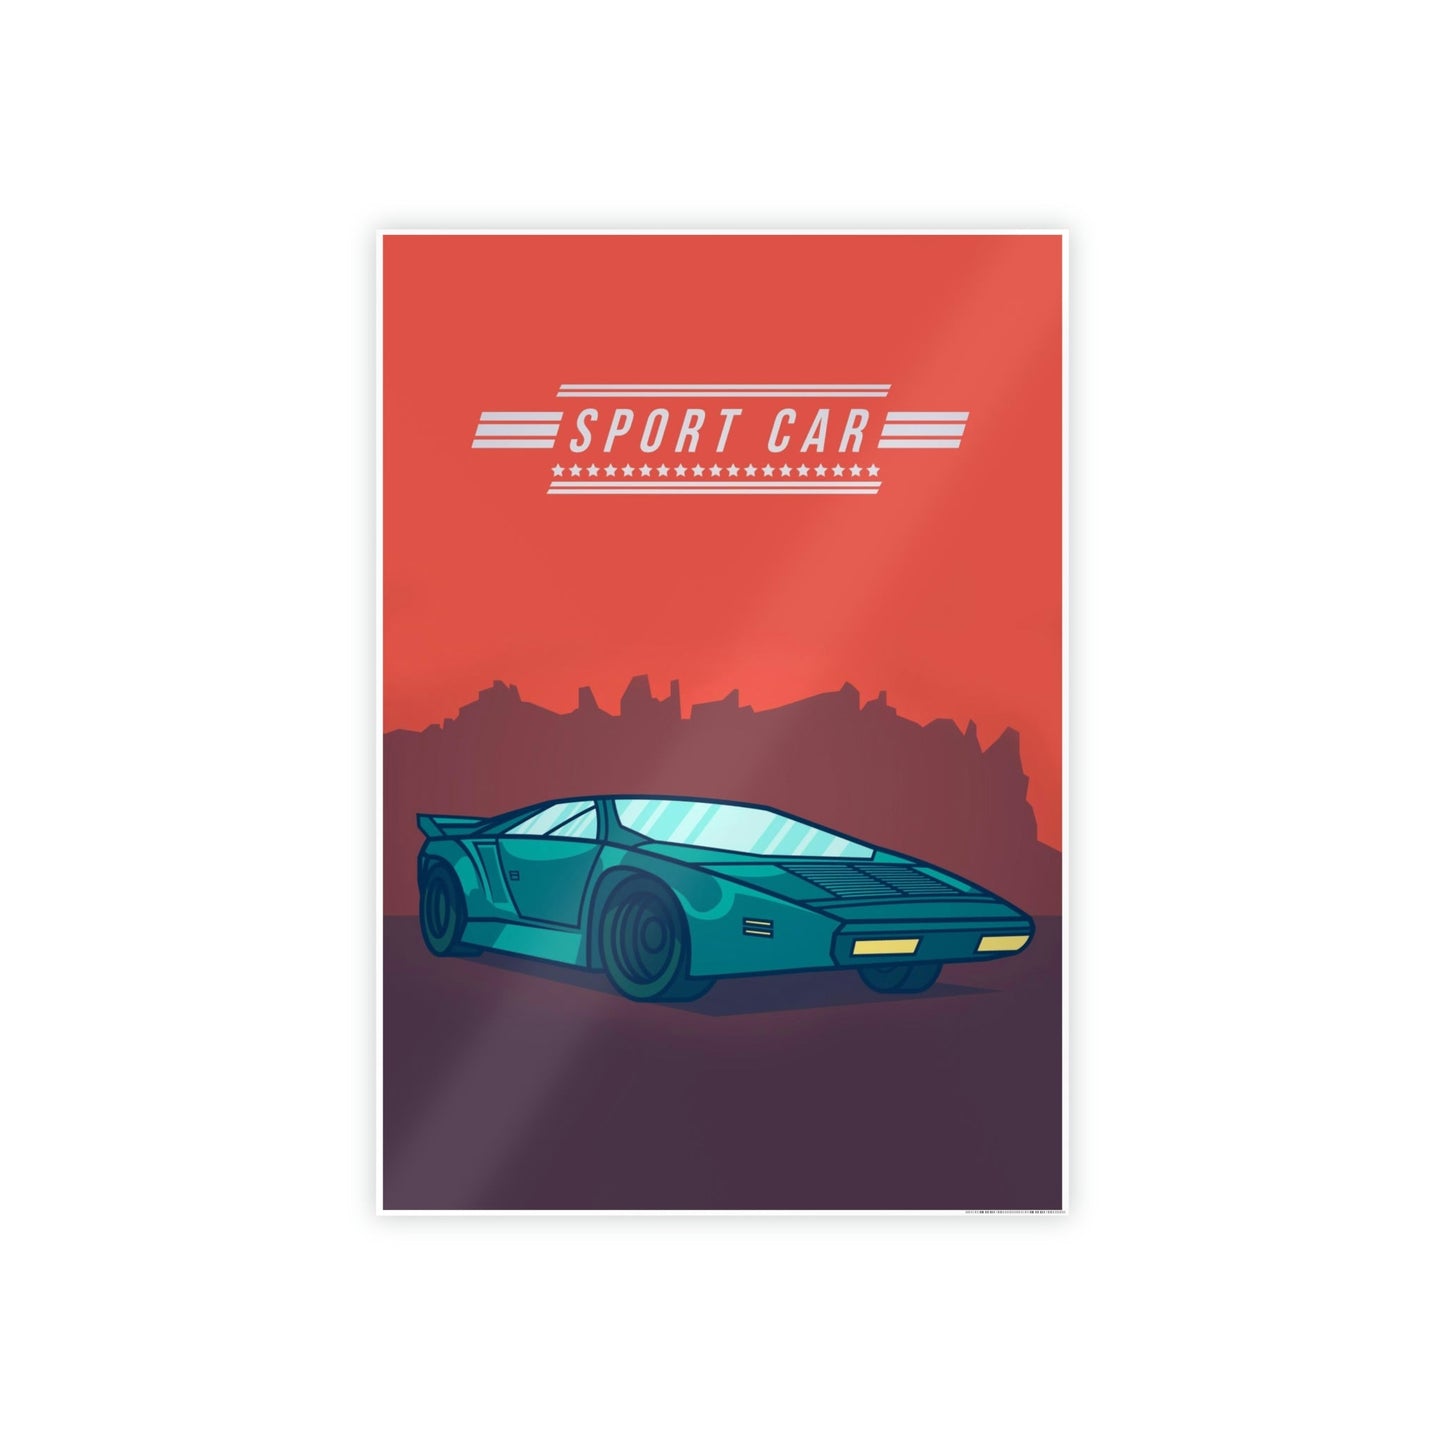 Sport Car Wall Art: Lamborghini Framed Poster & Canvas Print